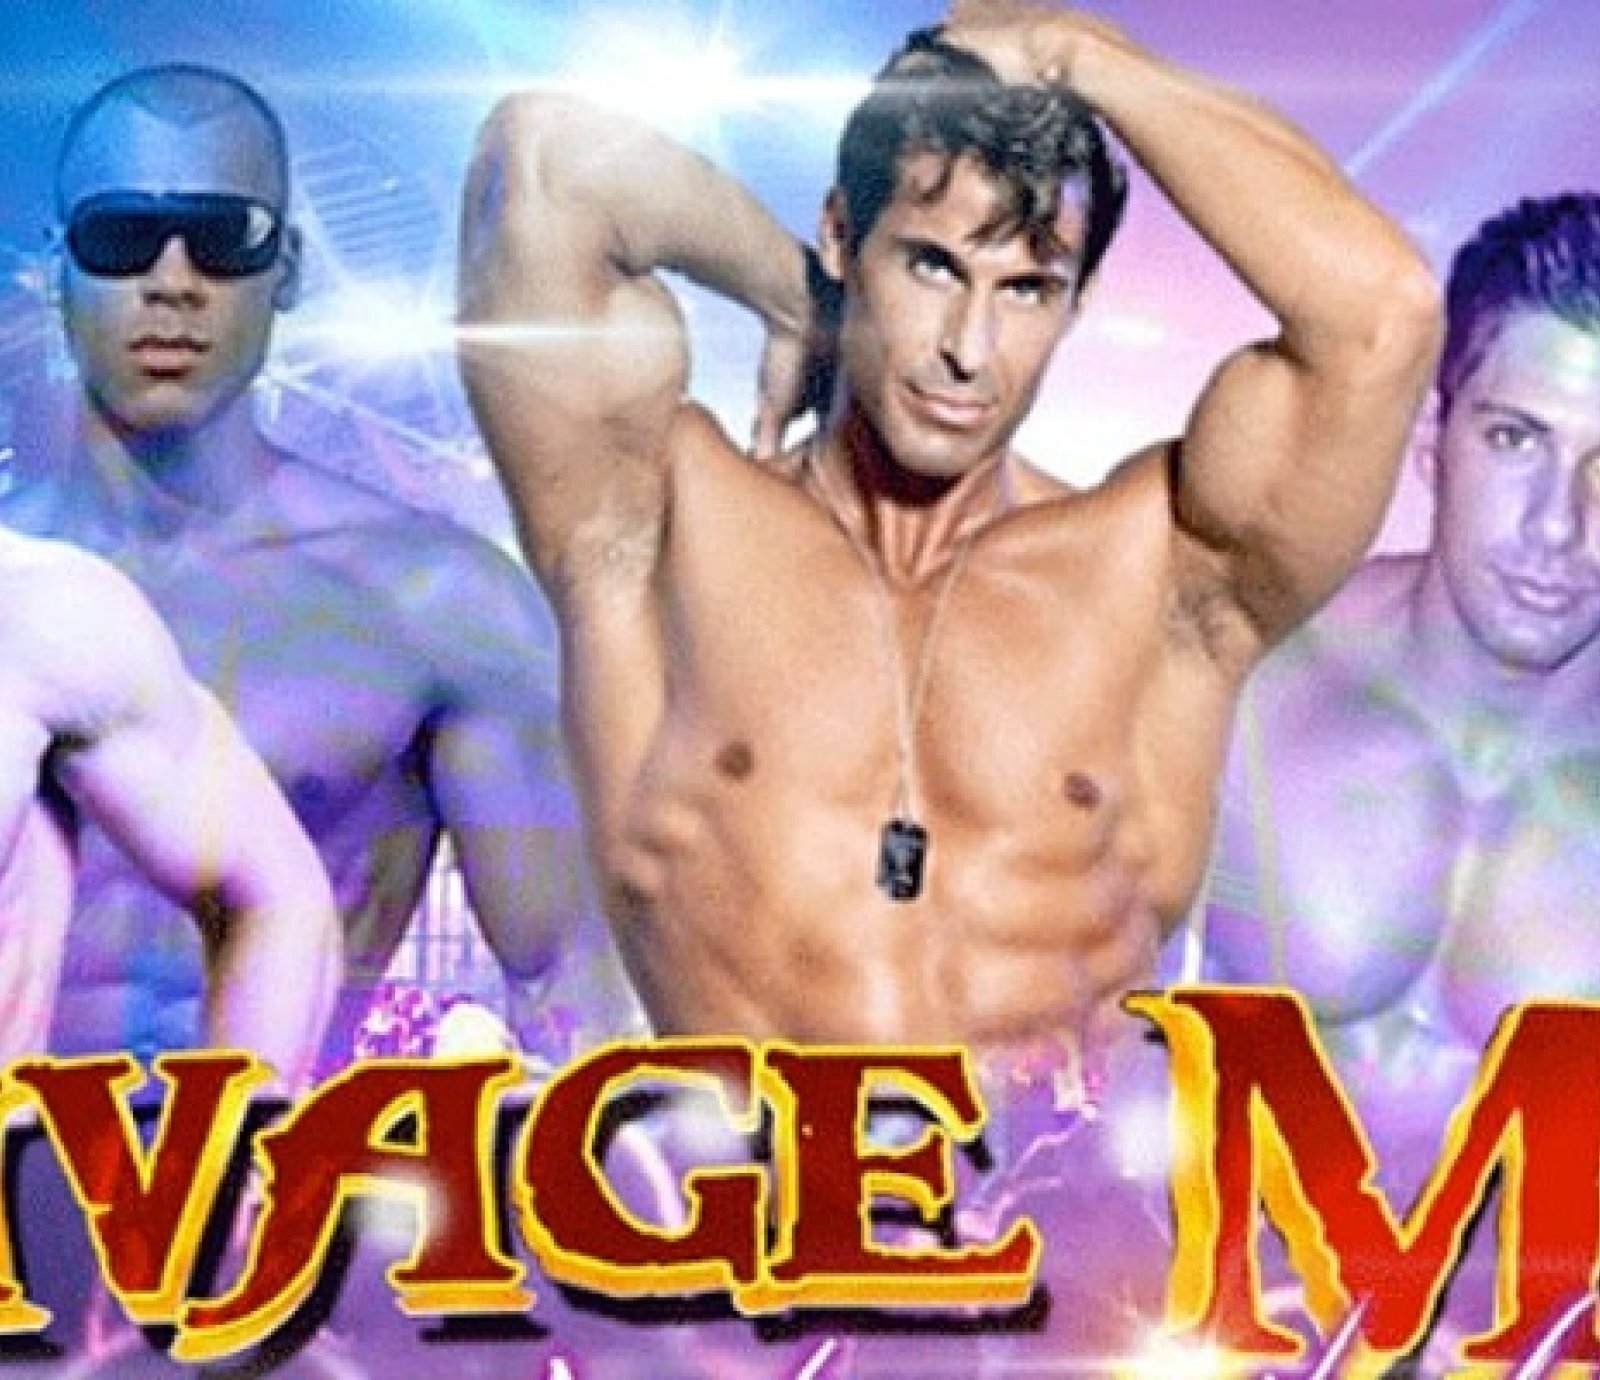 Savage Men Male Revue - Virginia Beach